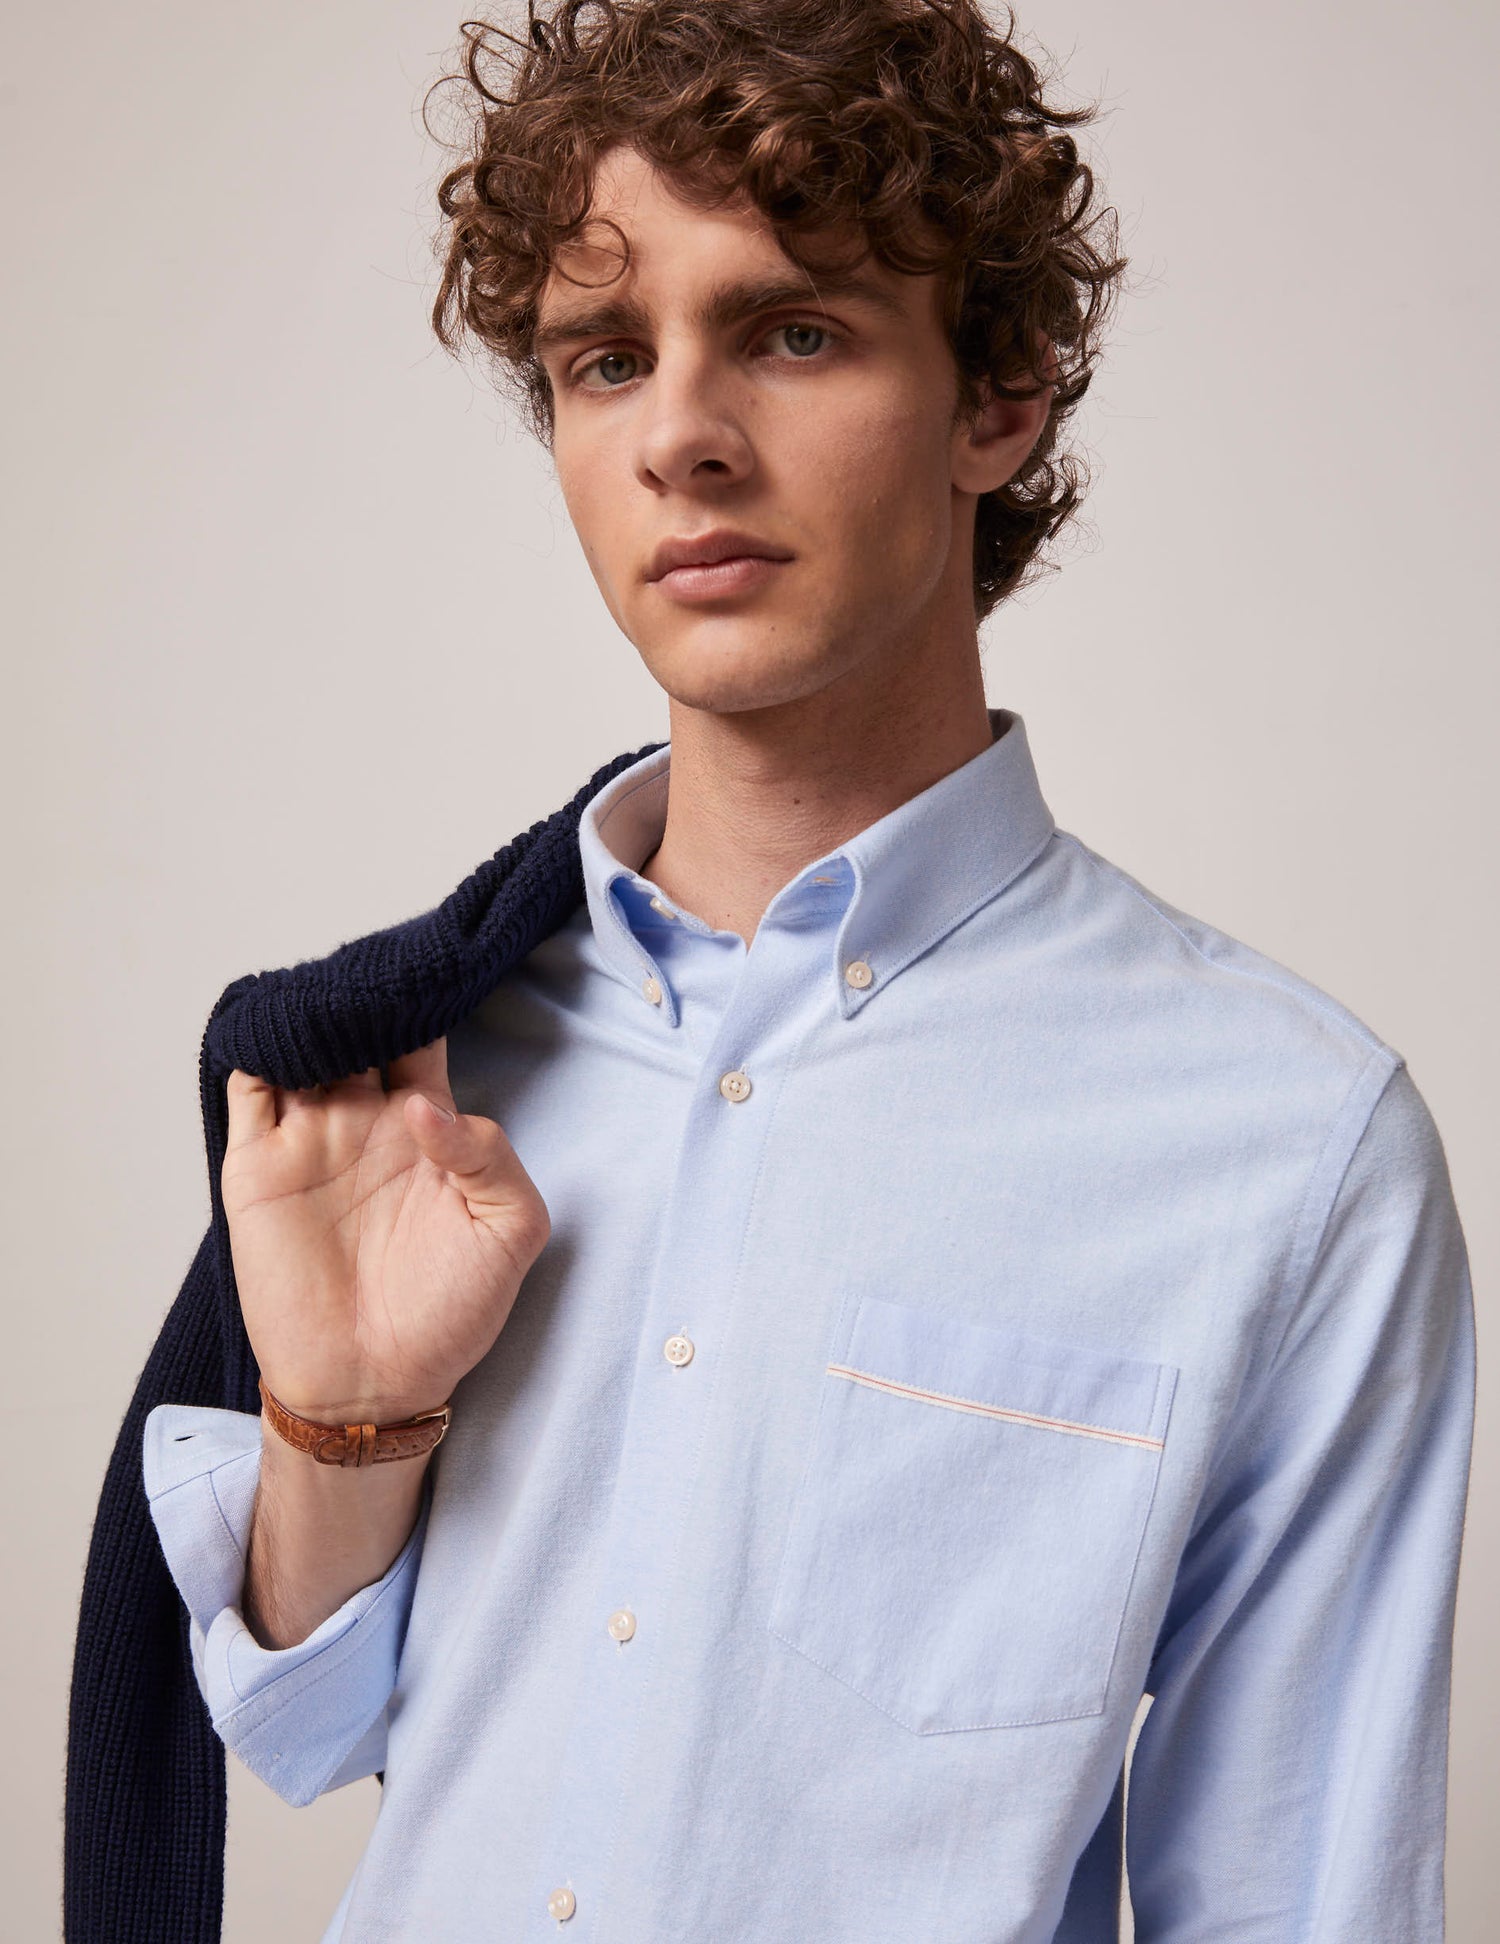 Blue Armand shirt - Oxford selvedge - Prodigious buttoned Collar#3